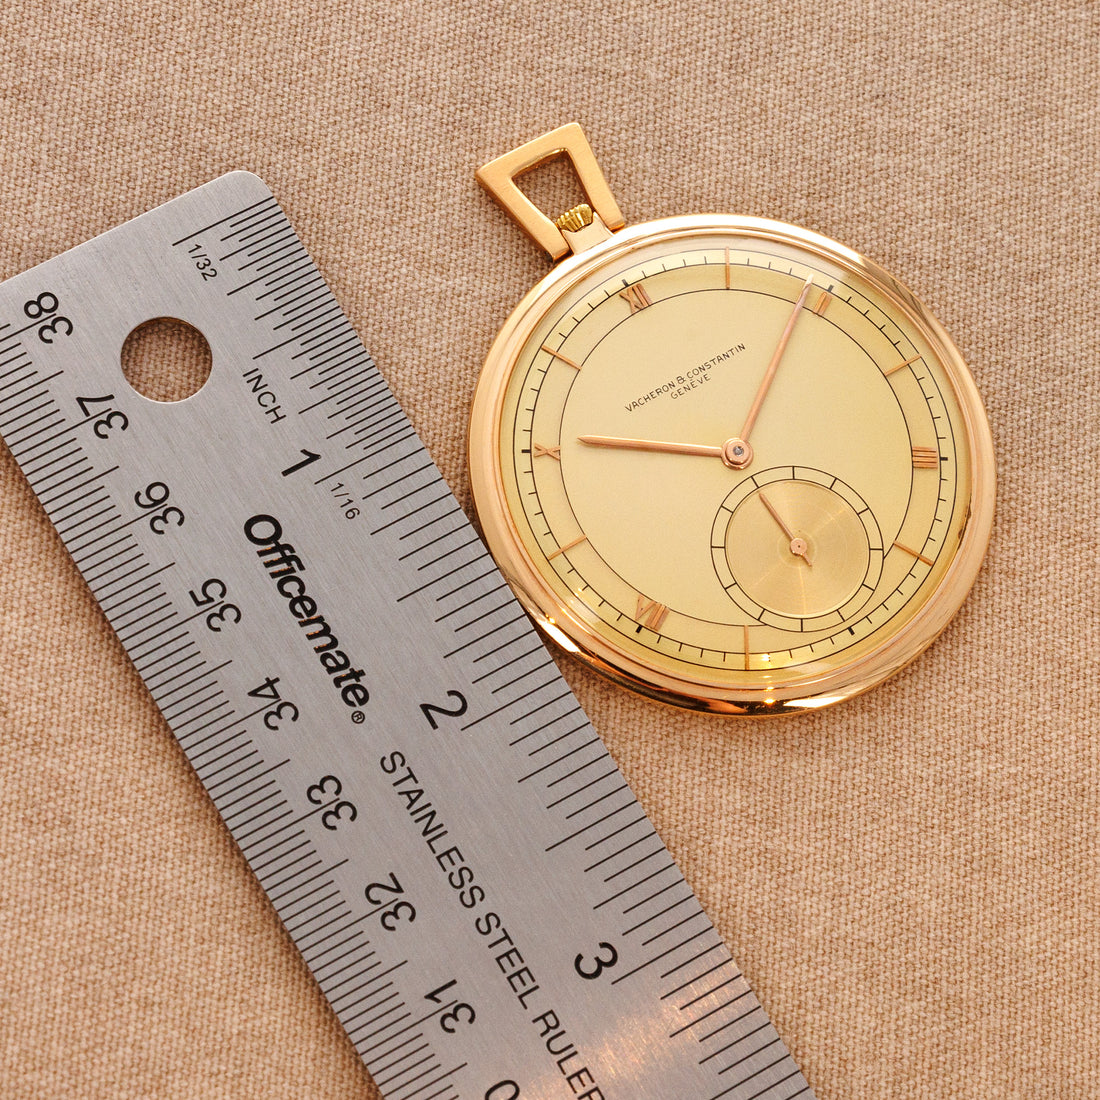 Vacheron Constantin Pink Gold Pocket Watch